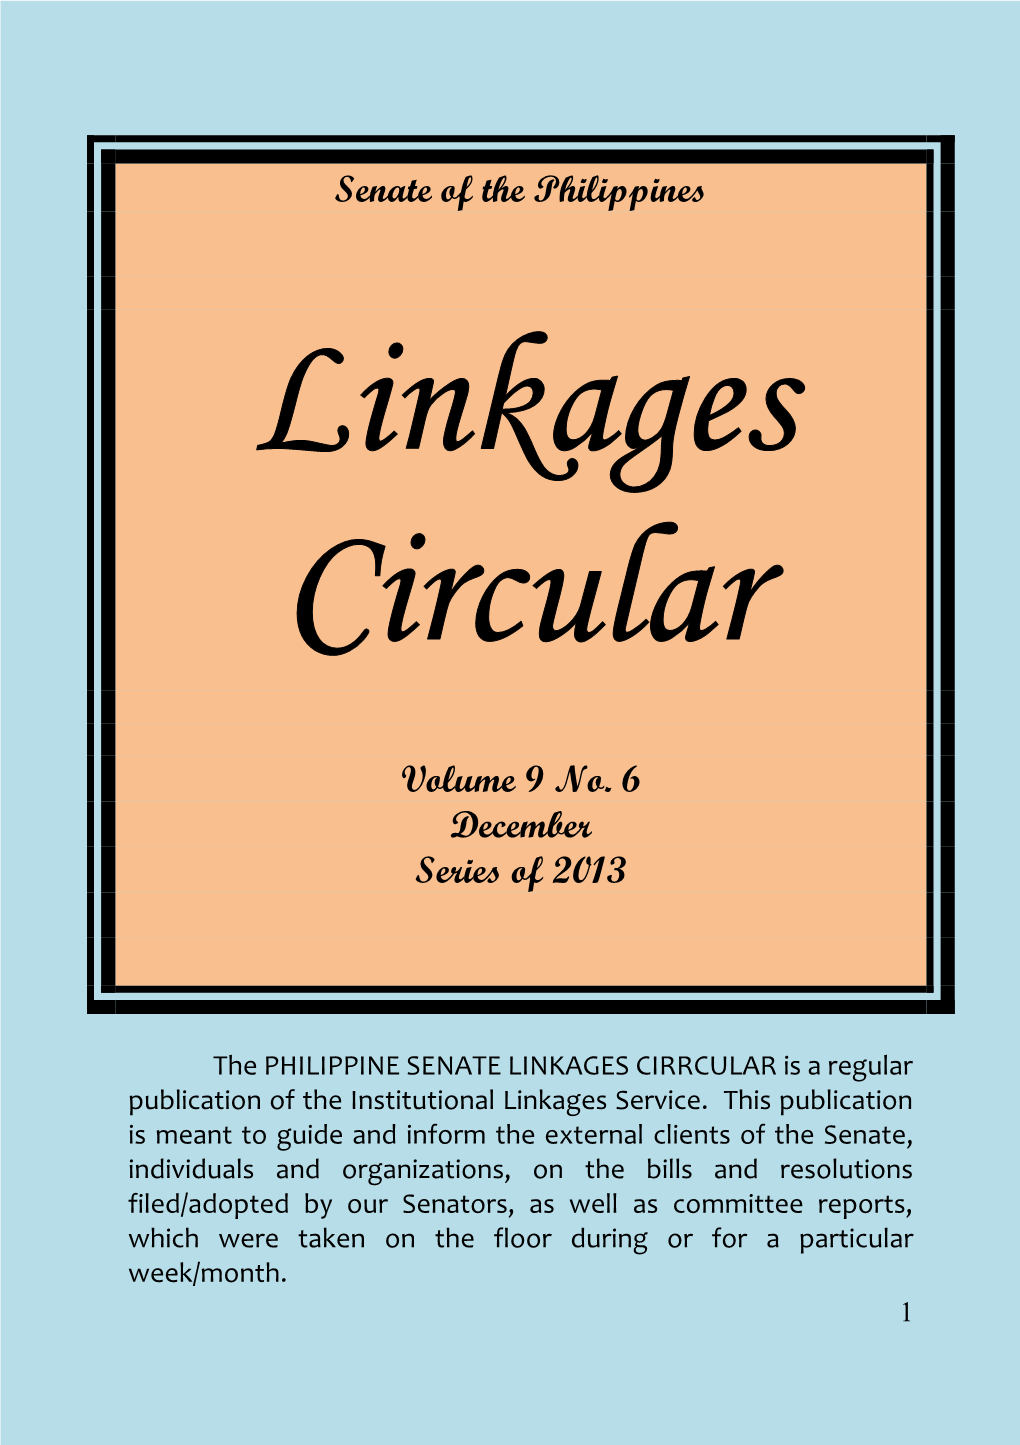 LINKAGES CIRCULAR Vol. 9 No. 6, Series of 2013”